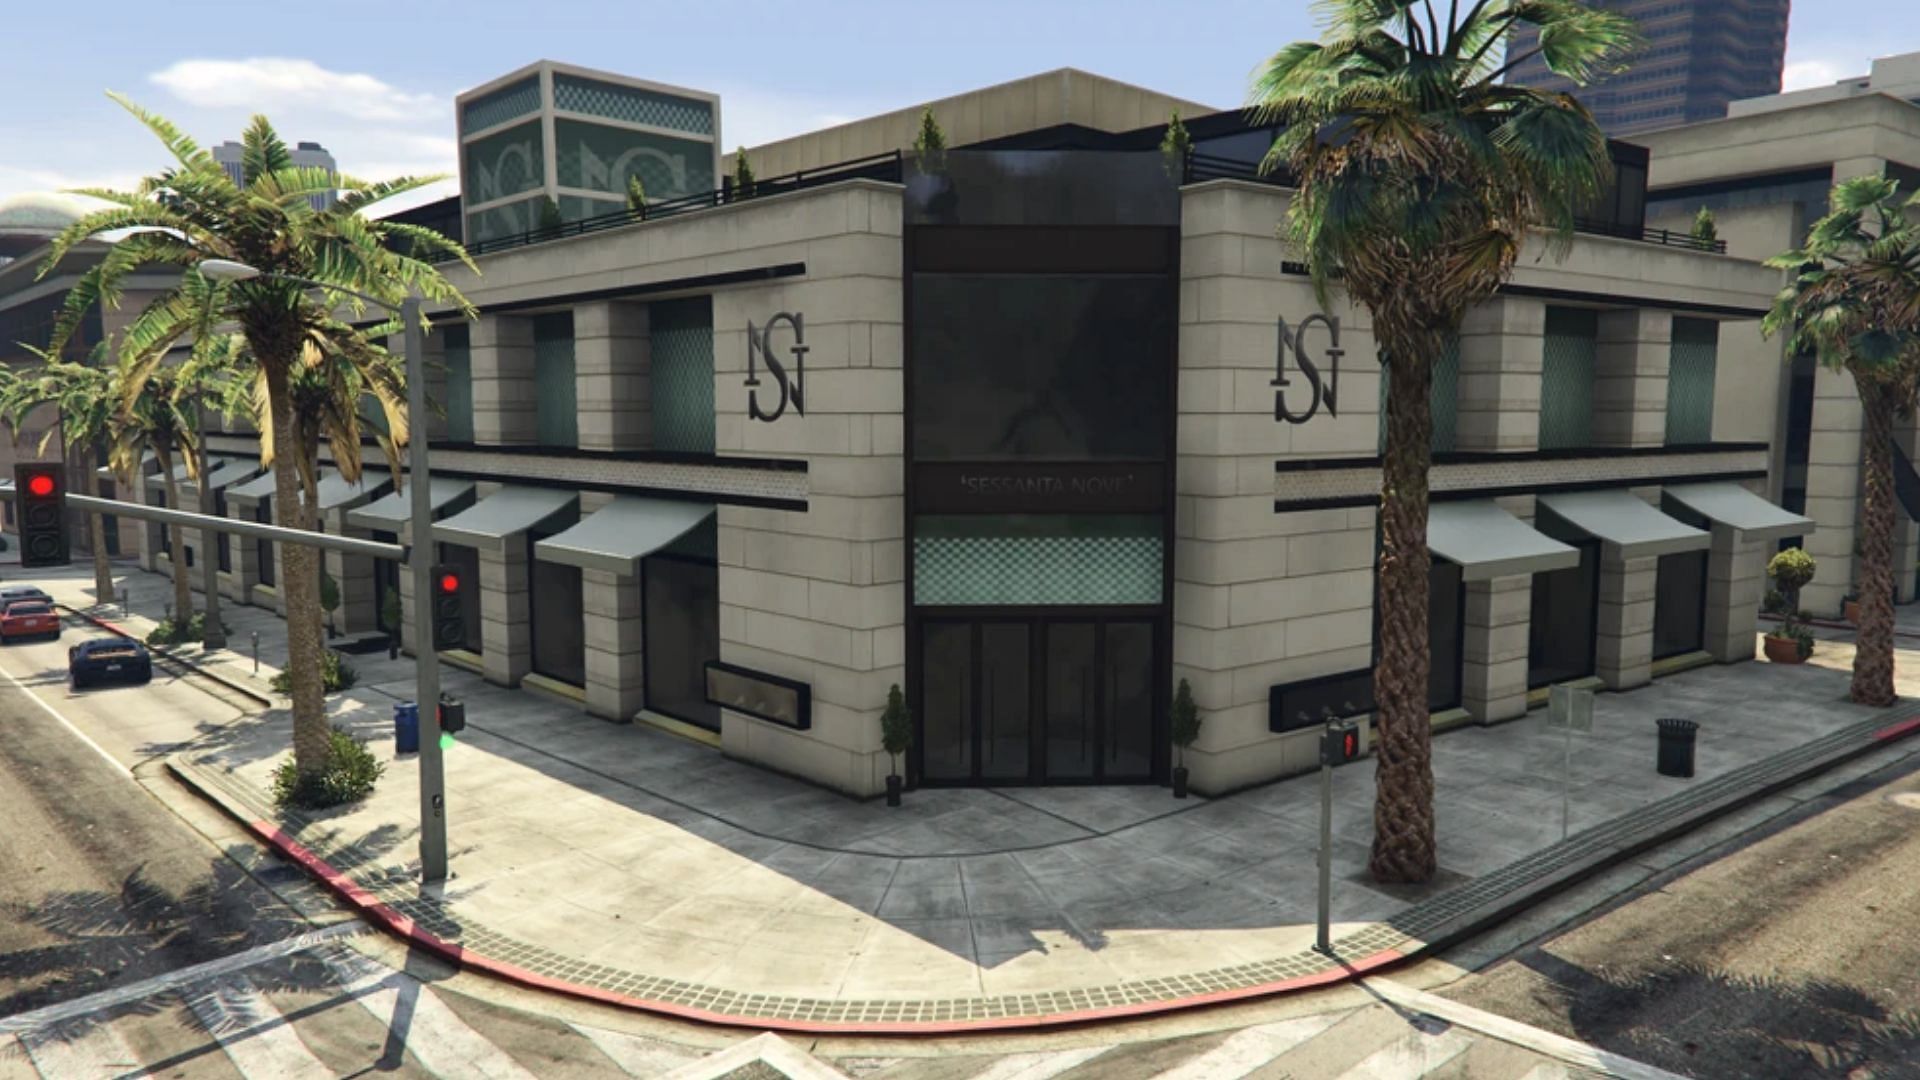 The Sessanta Nove showroom in Grand Theft Auto 5 (Image via GTA Wiki)